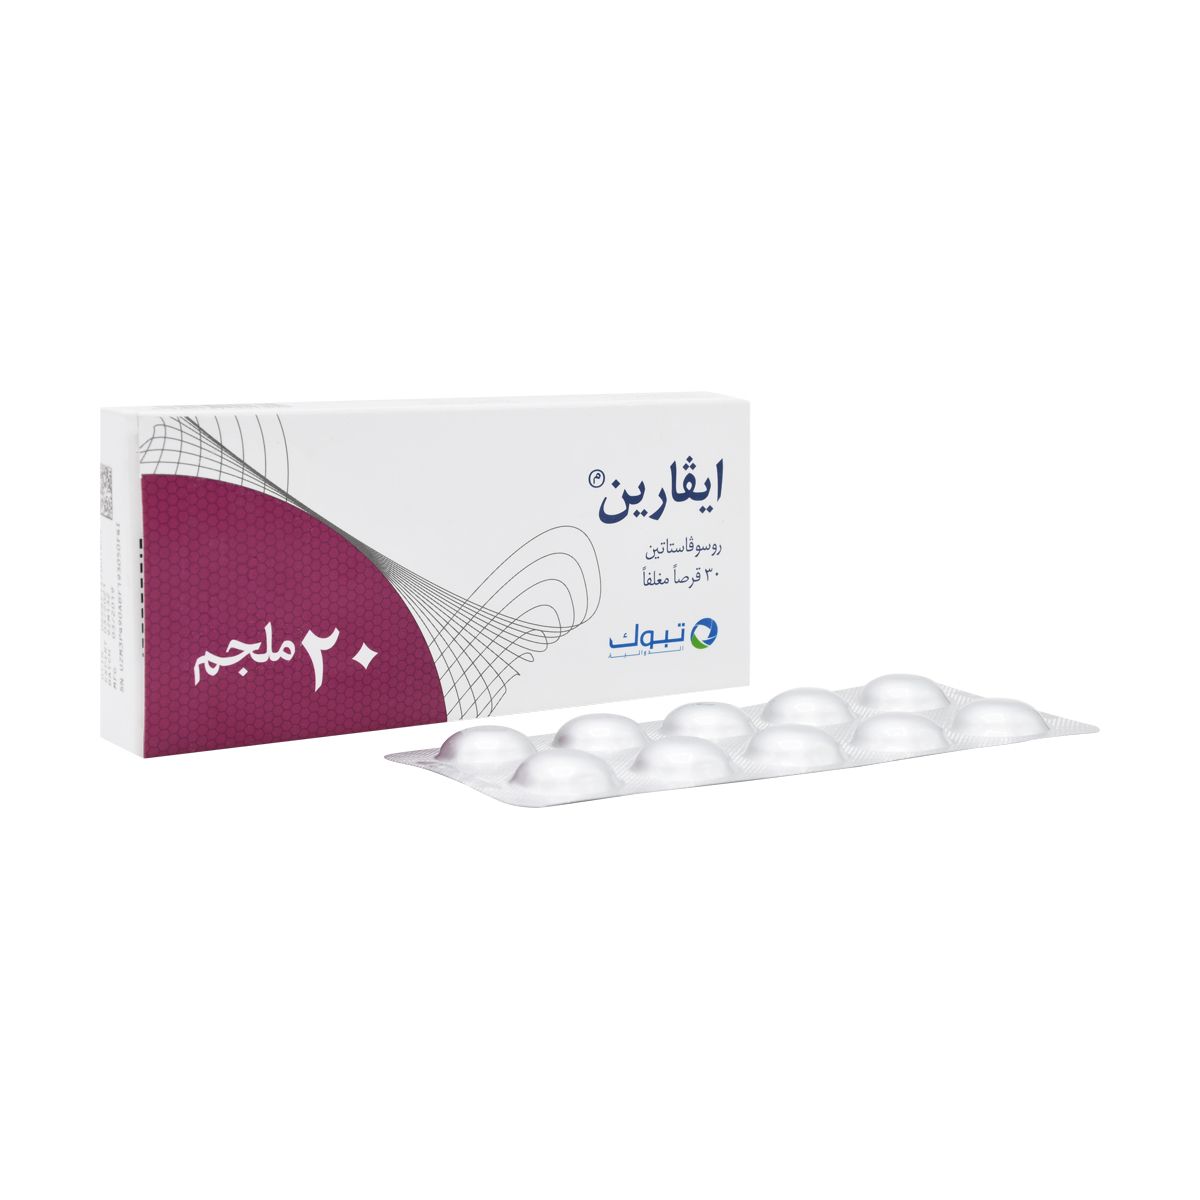 IVARIN Ivarin 20 mg tab